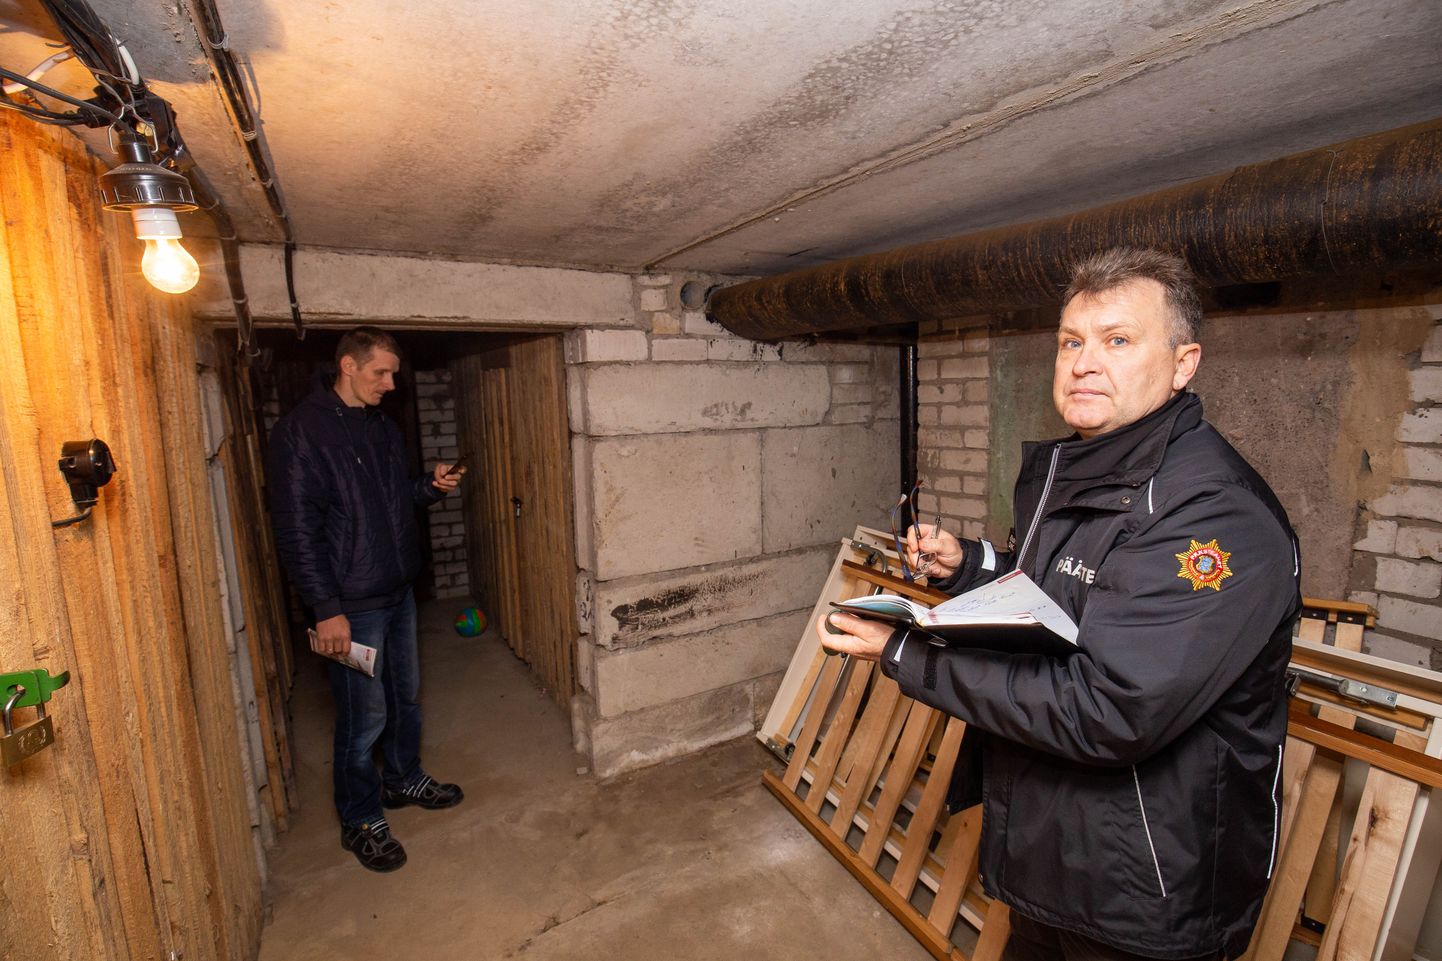 Lääne päästekeskuse järelevalveinspektor Lennart Okas Koerus kortermaja 
kontrollimas.